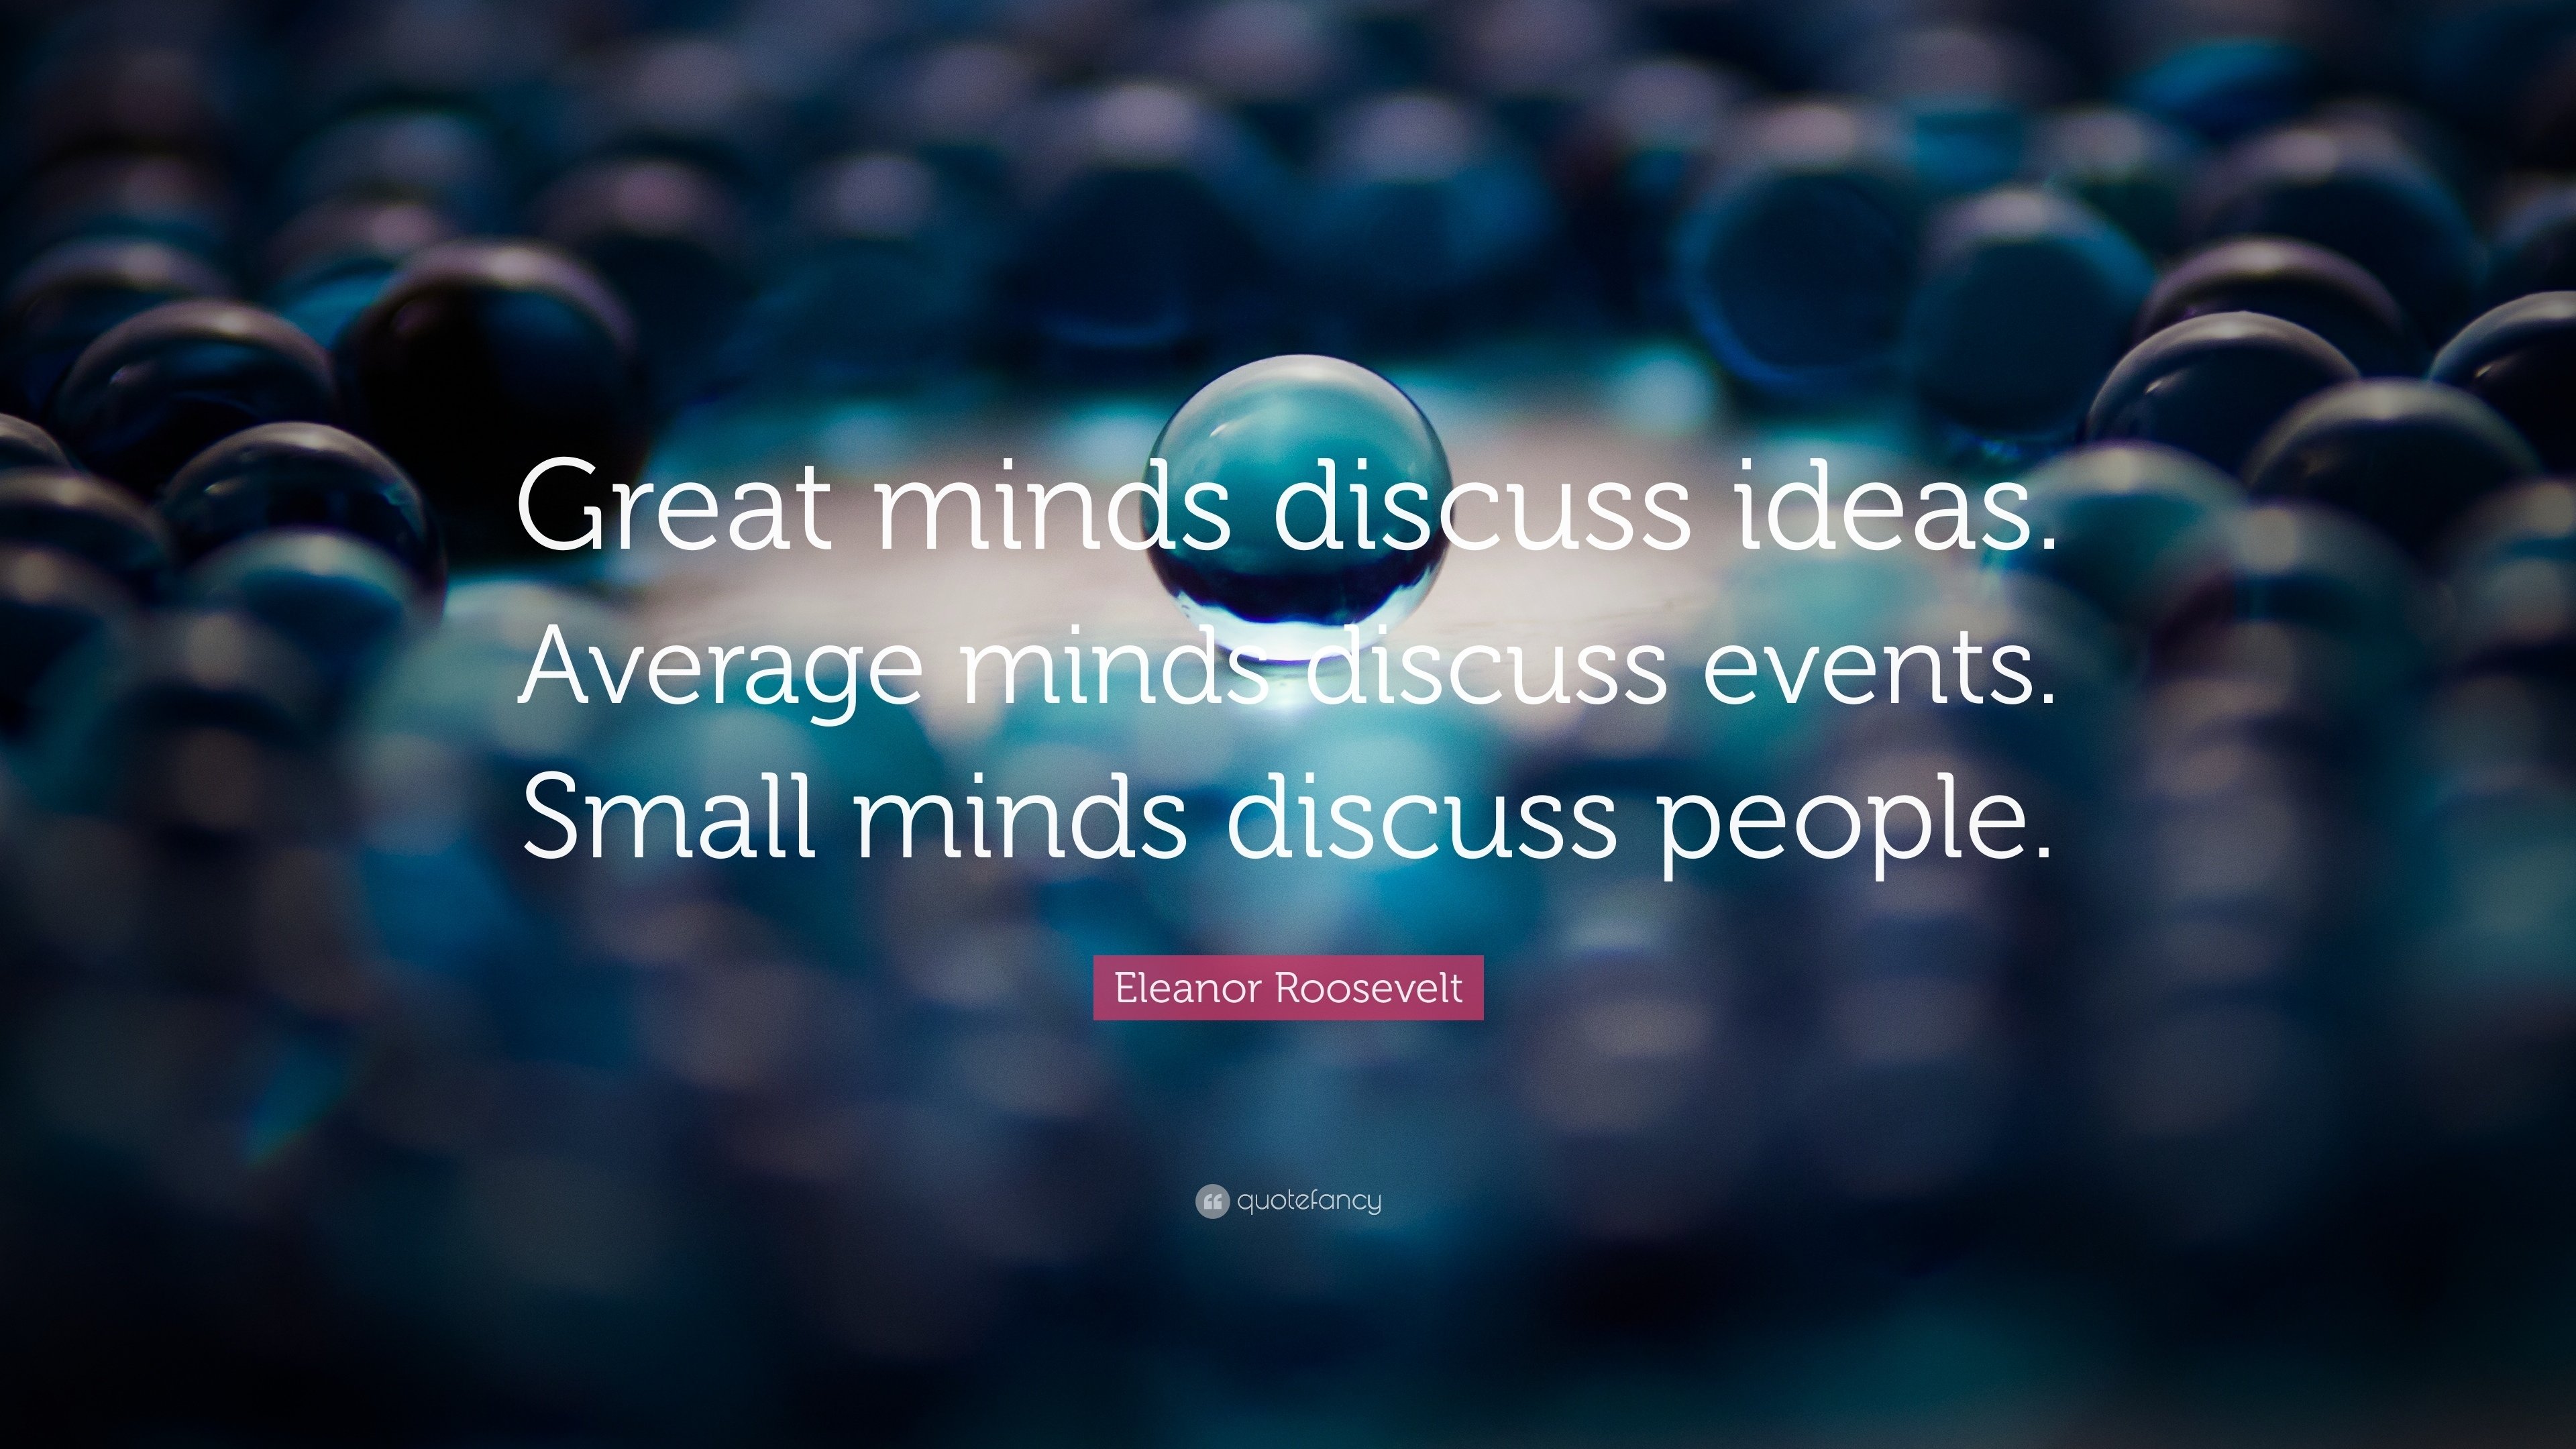 10 Pretty Great Minds Discuss Ideas Average Minds Discuss Events great minds discuss ideas average minds discuss events small minds 4 2022